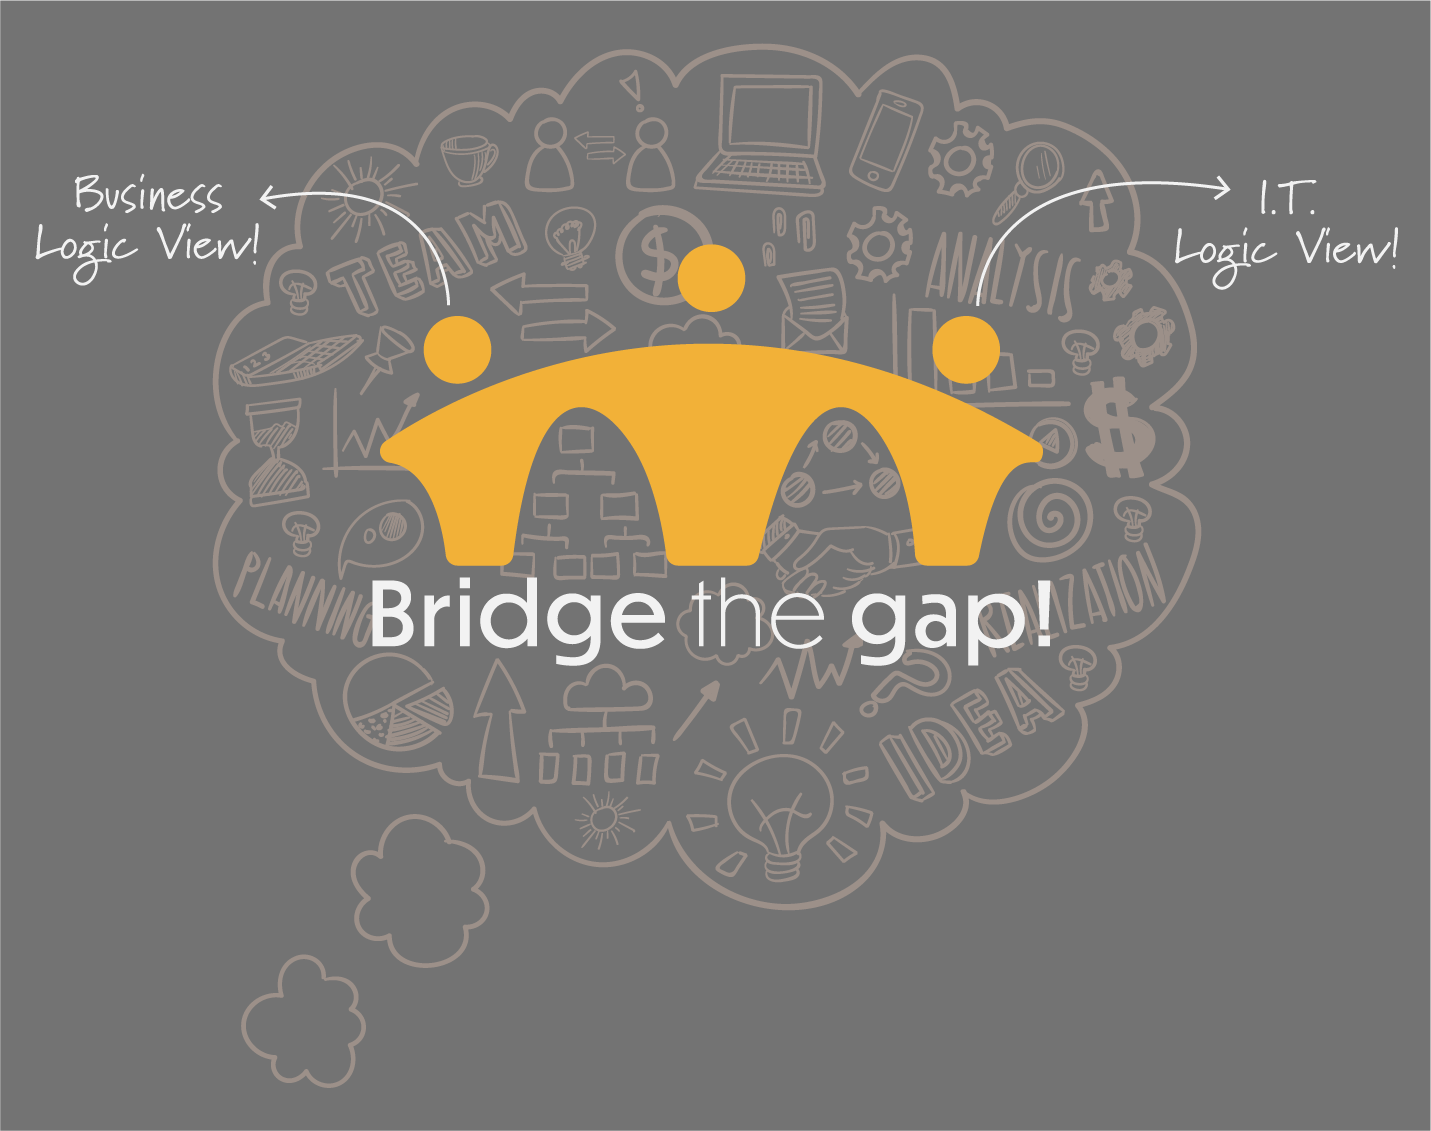 Image of Bridge the gap between business logic view & IT Logic View!